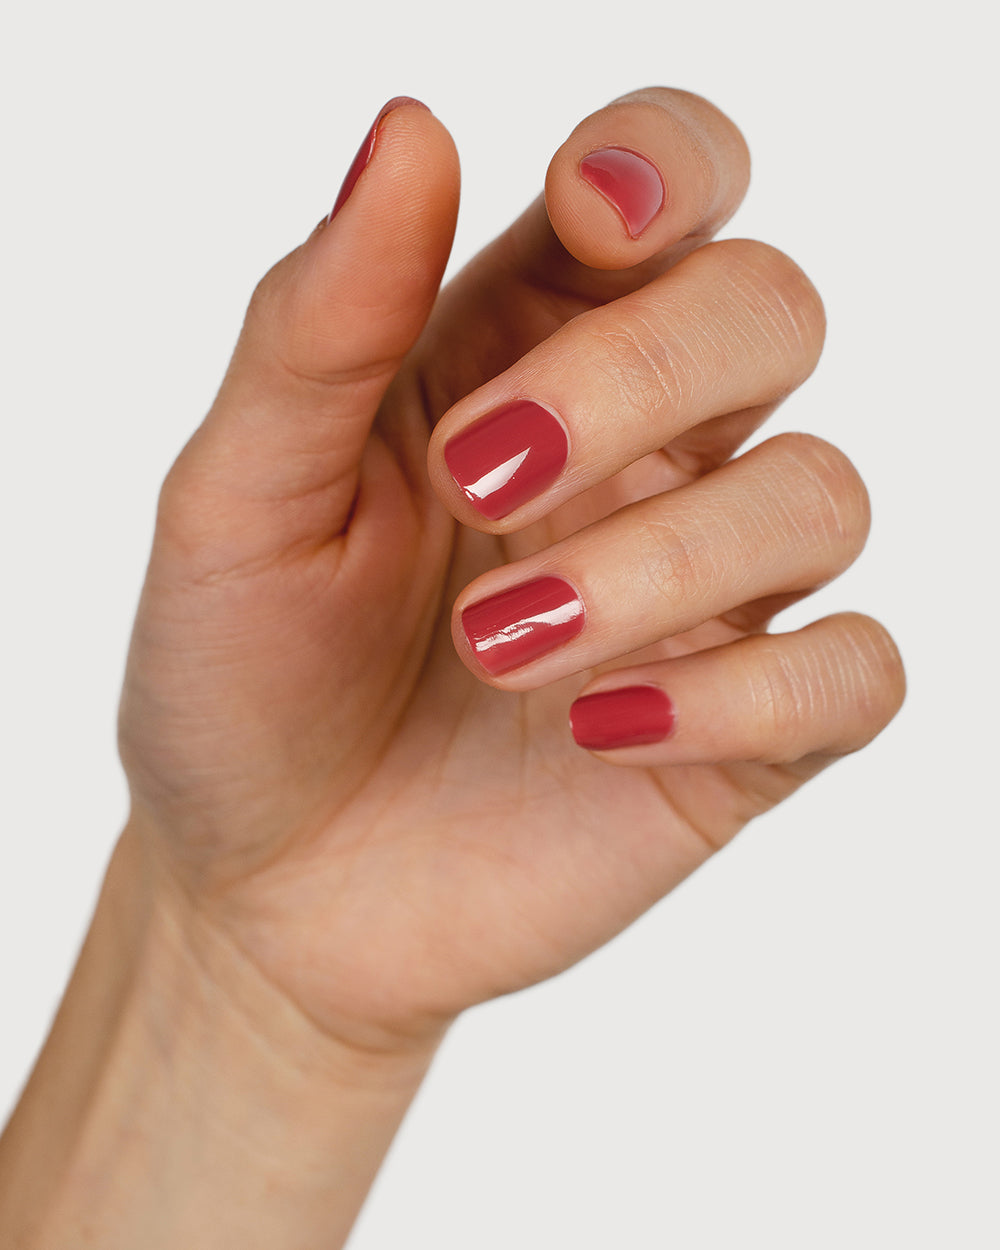 dusty rosebud nail polish hand swatch on fair skin tone